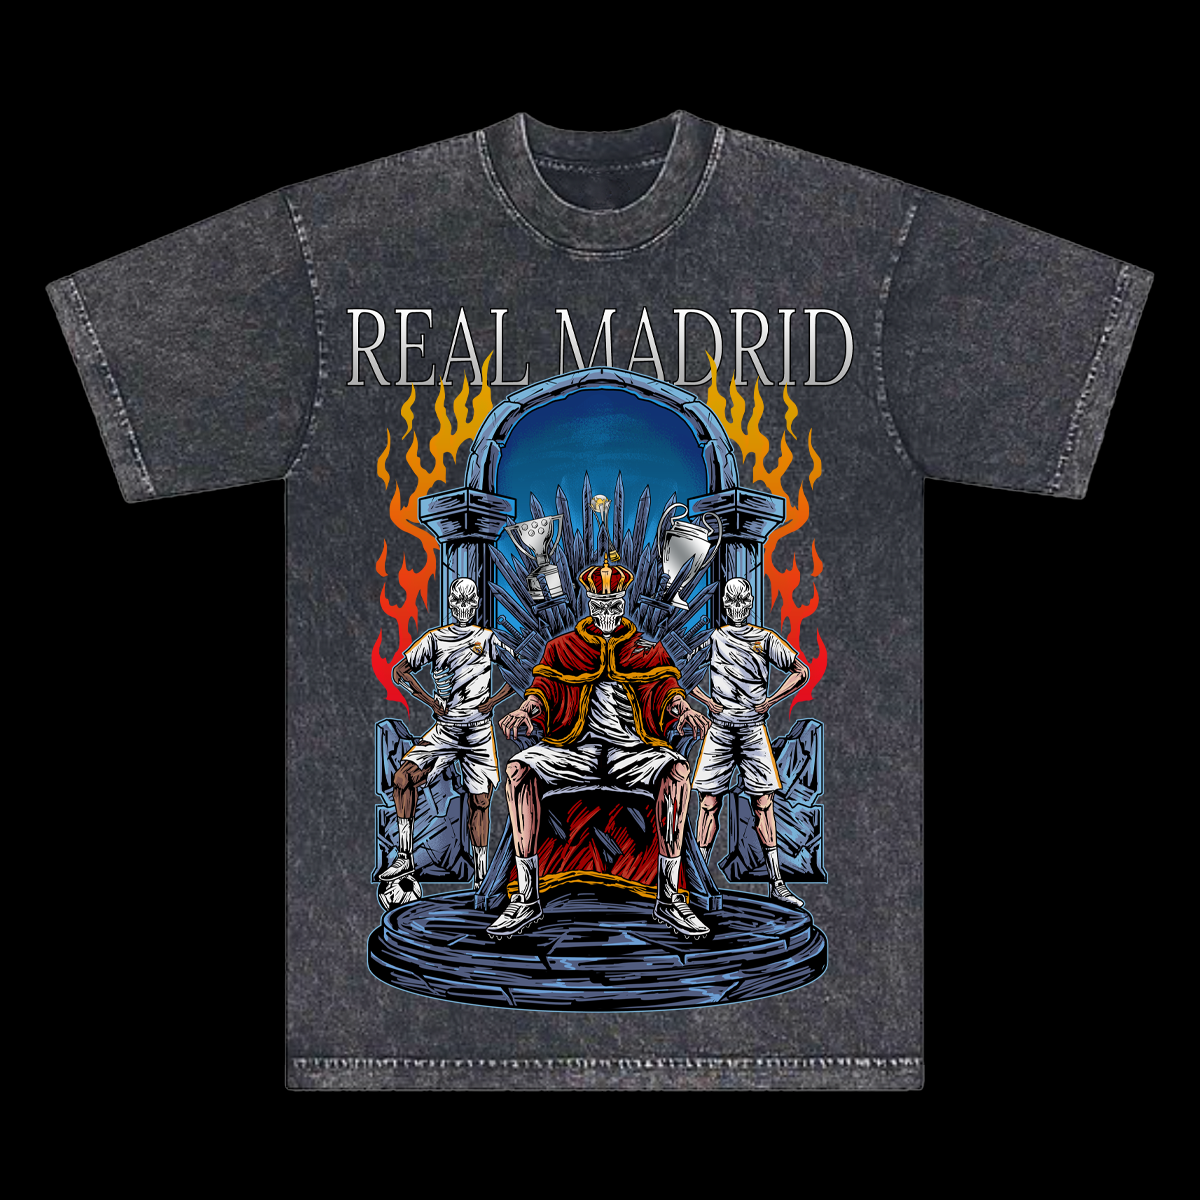 INCARNAPE REAL MADRID "THE ROYAL" TEE